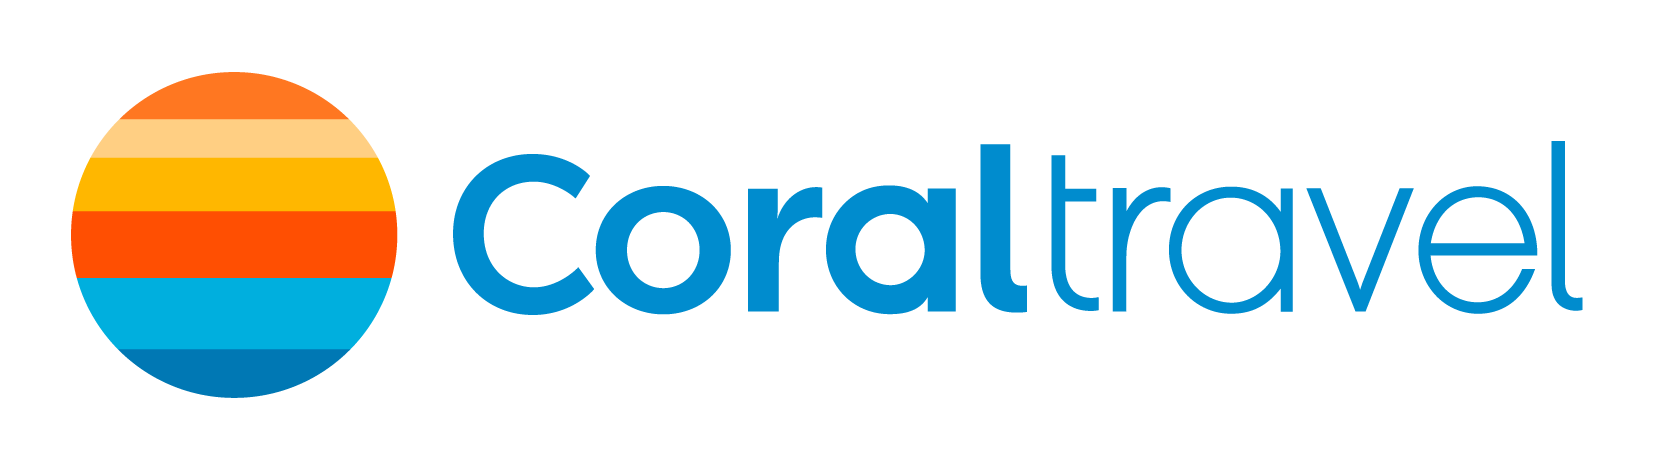 Coral поиск. Корал Тревел. Coral логотип. Coral Travel лого. Coral Travel турагентство.